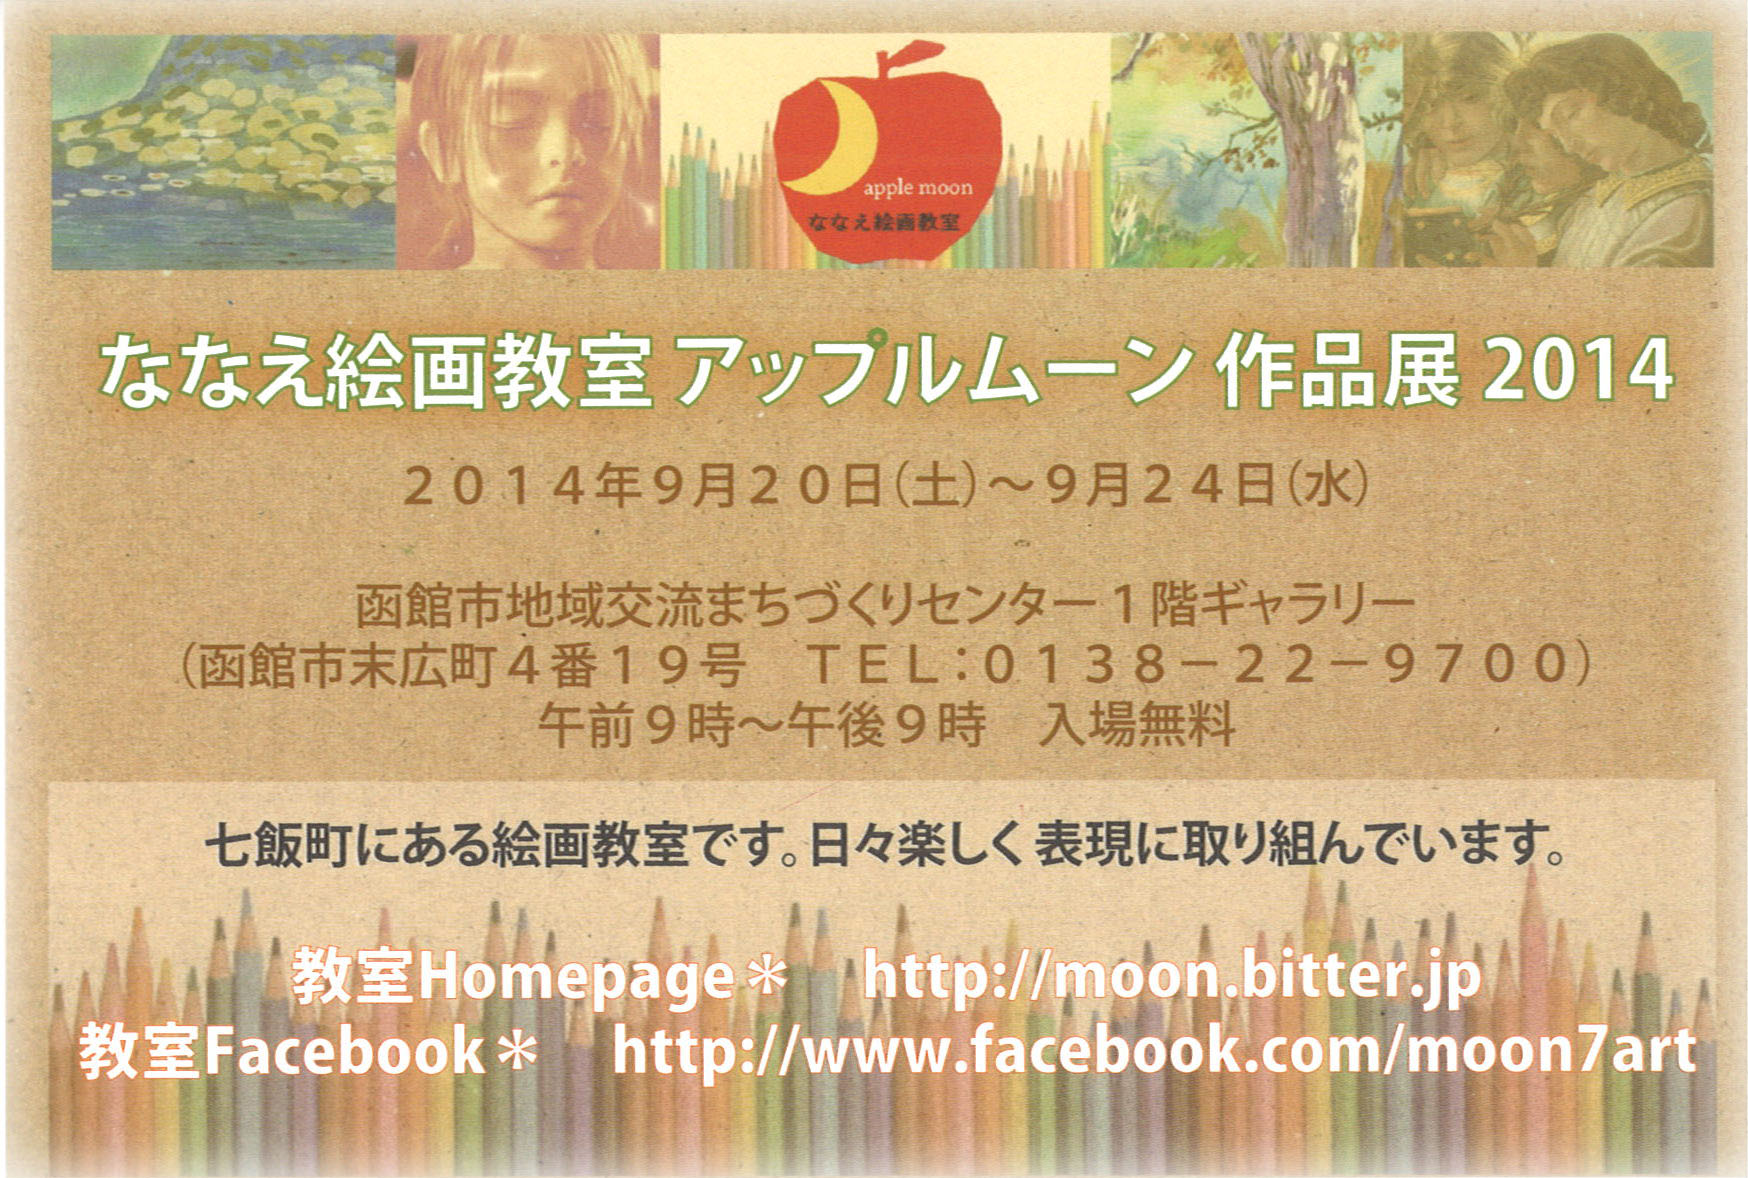 http://hakomachi.com/diary2/images/postcard.jpg